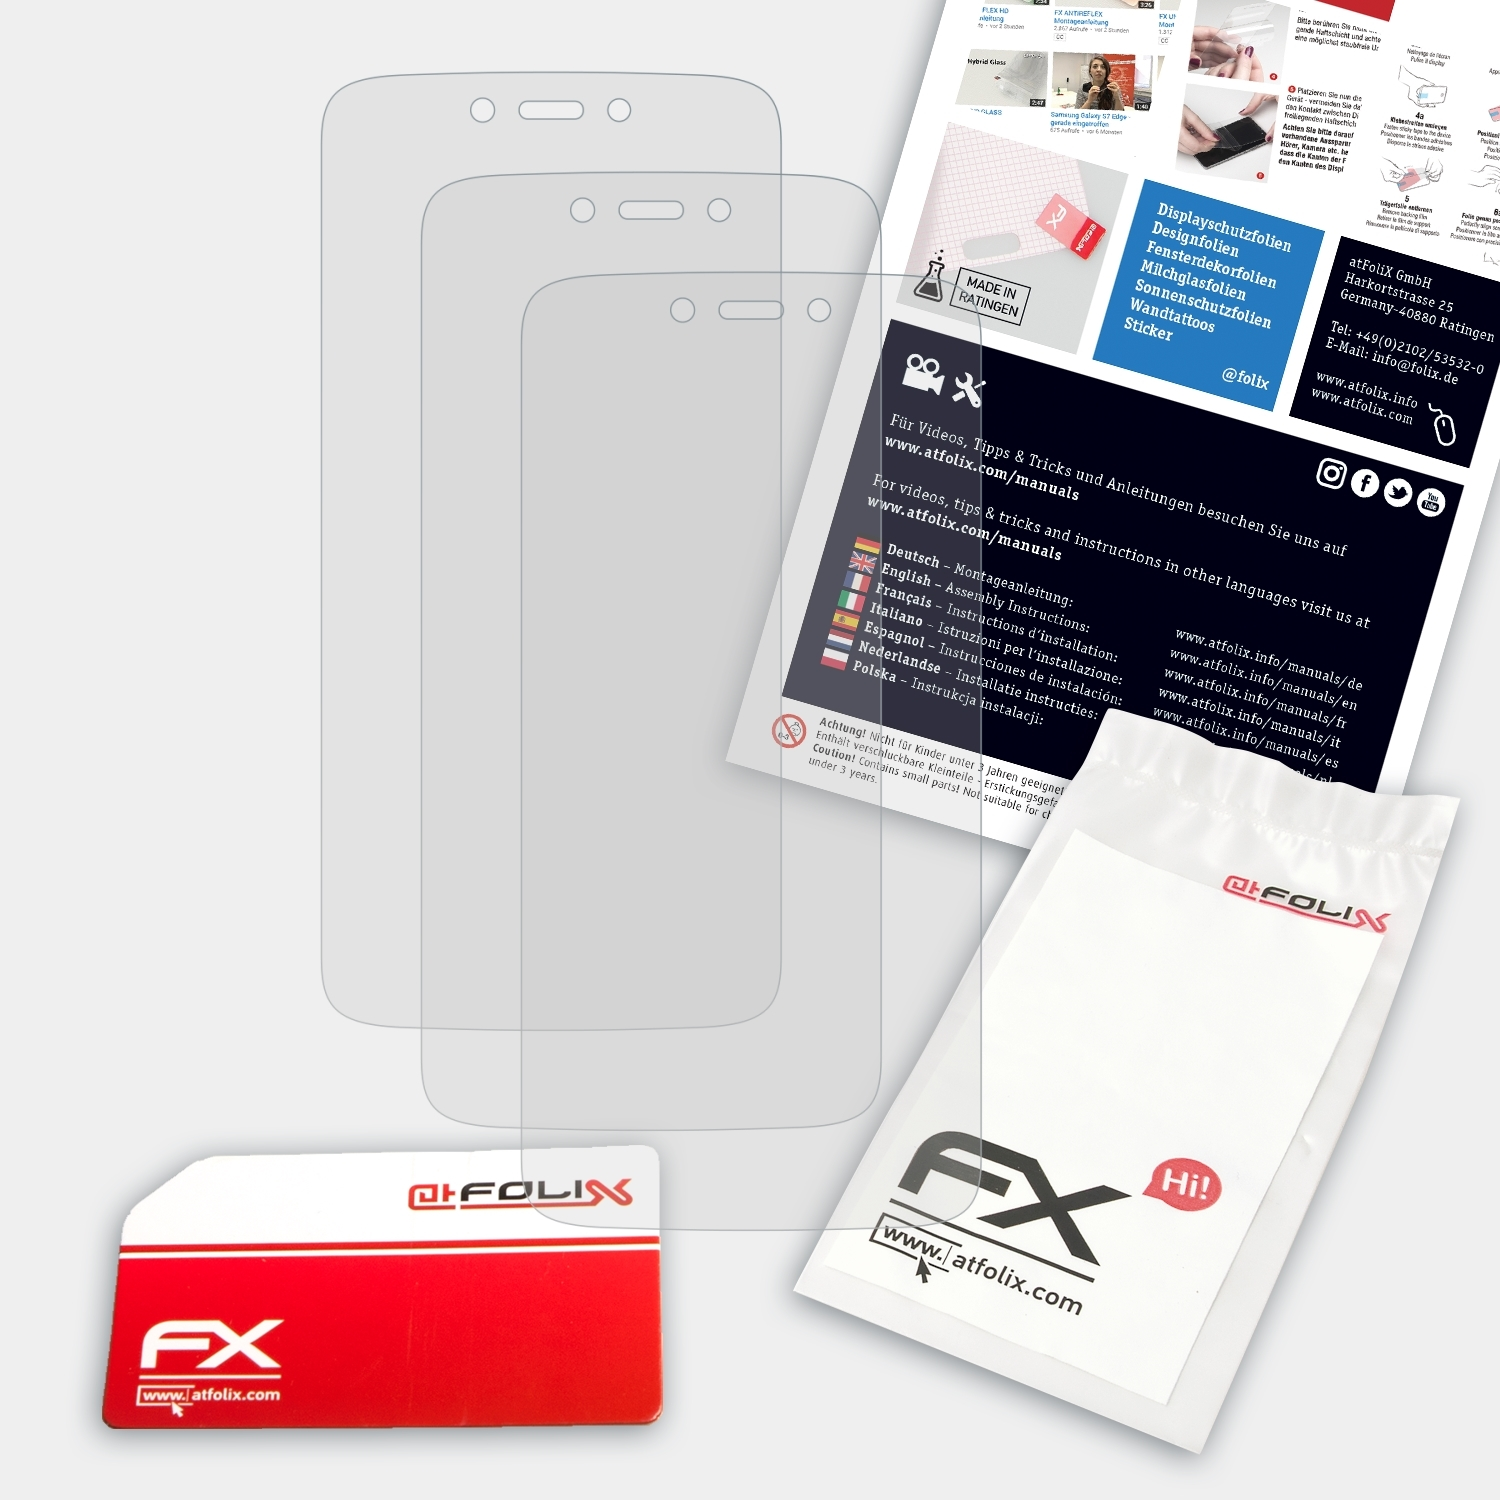 ATFOLIX 3x FX-Antireflex Lenovo C Plus) Motorola Moto Displayschutz(für